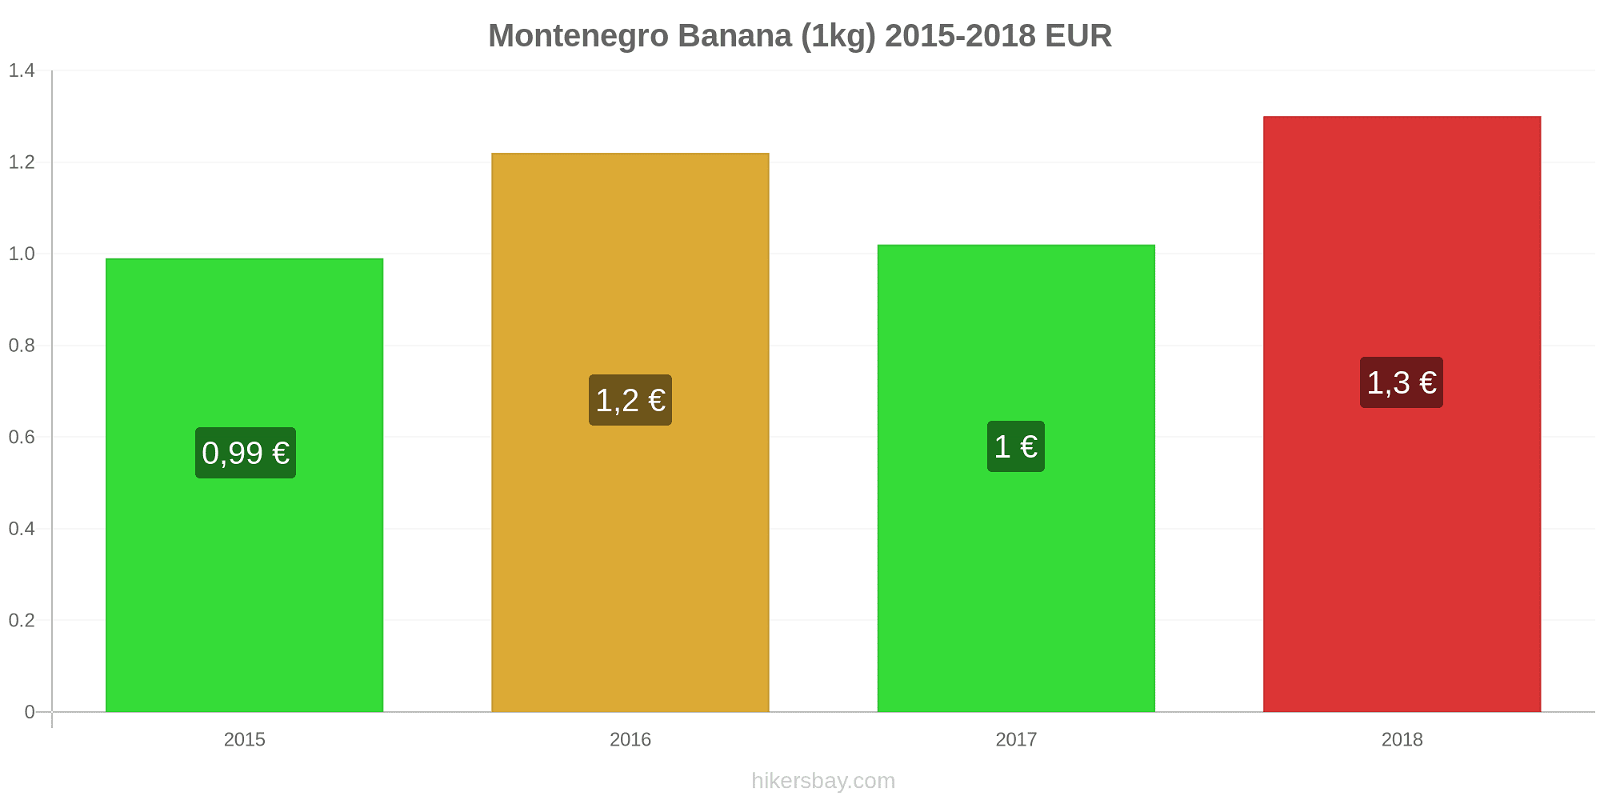 Montenegro cambi di prezzo Banane (1kg) hikersbay.com